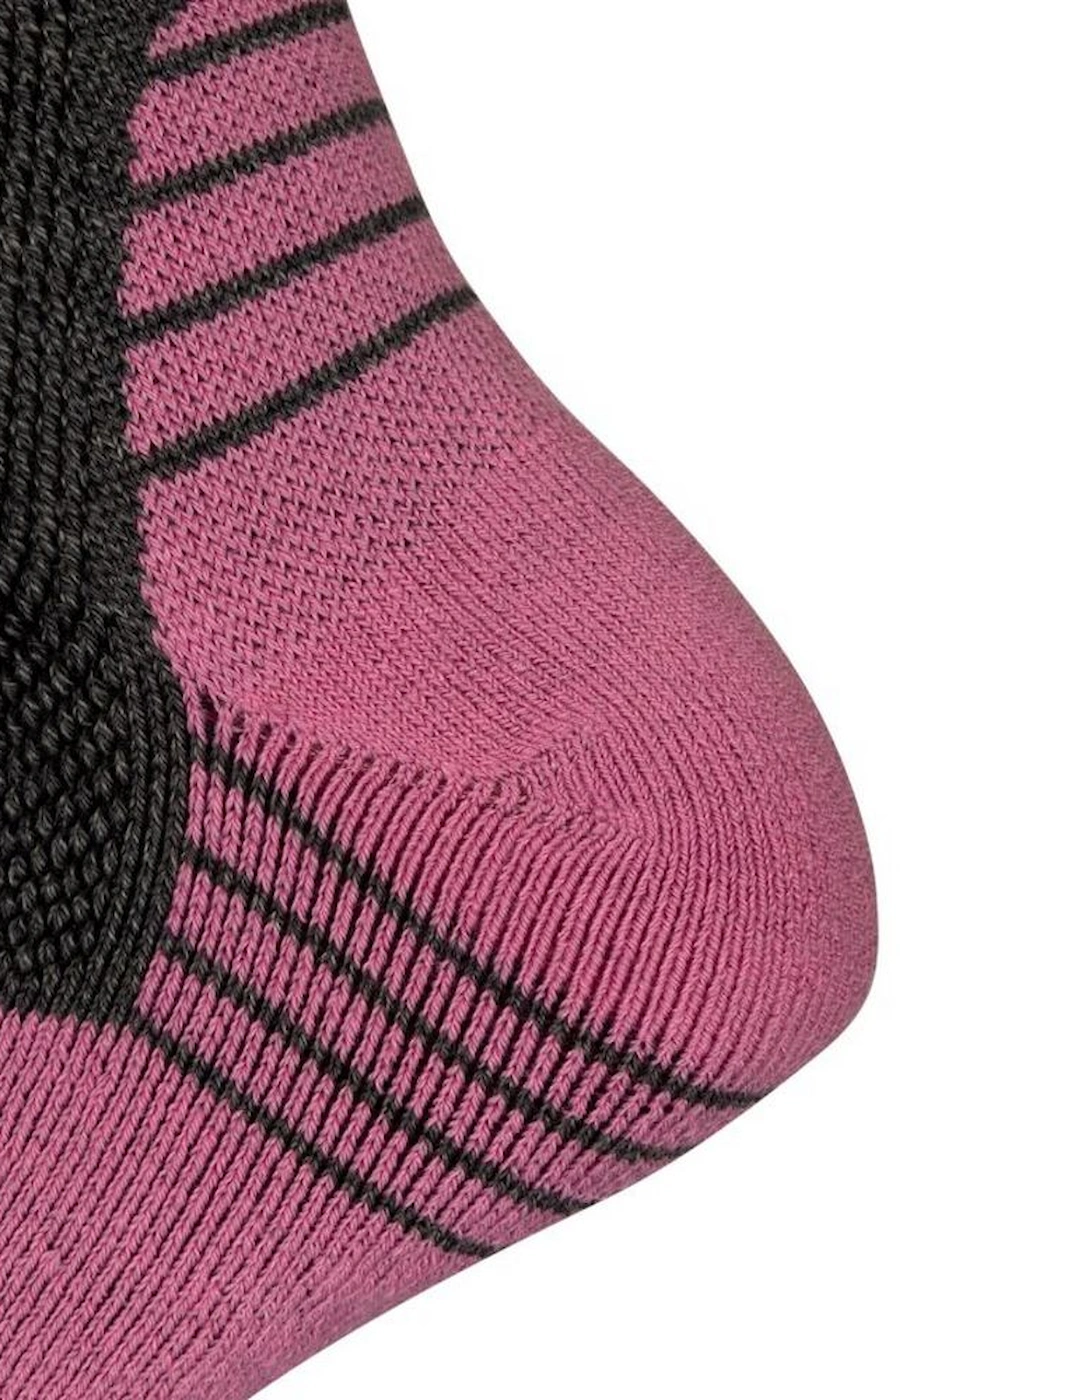 Unisex Adult Hilliard DLX Trekking Socks